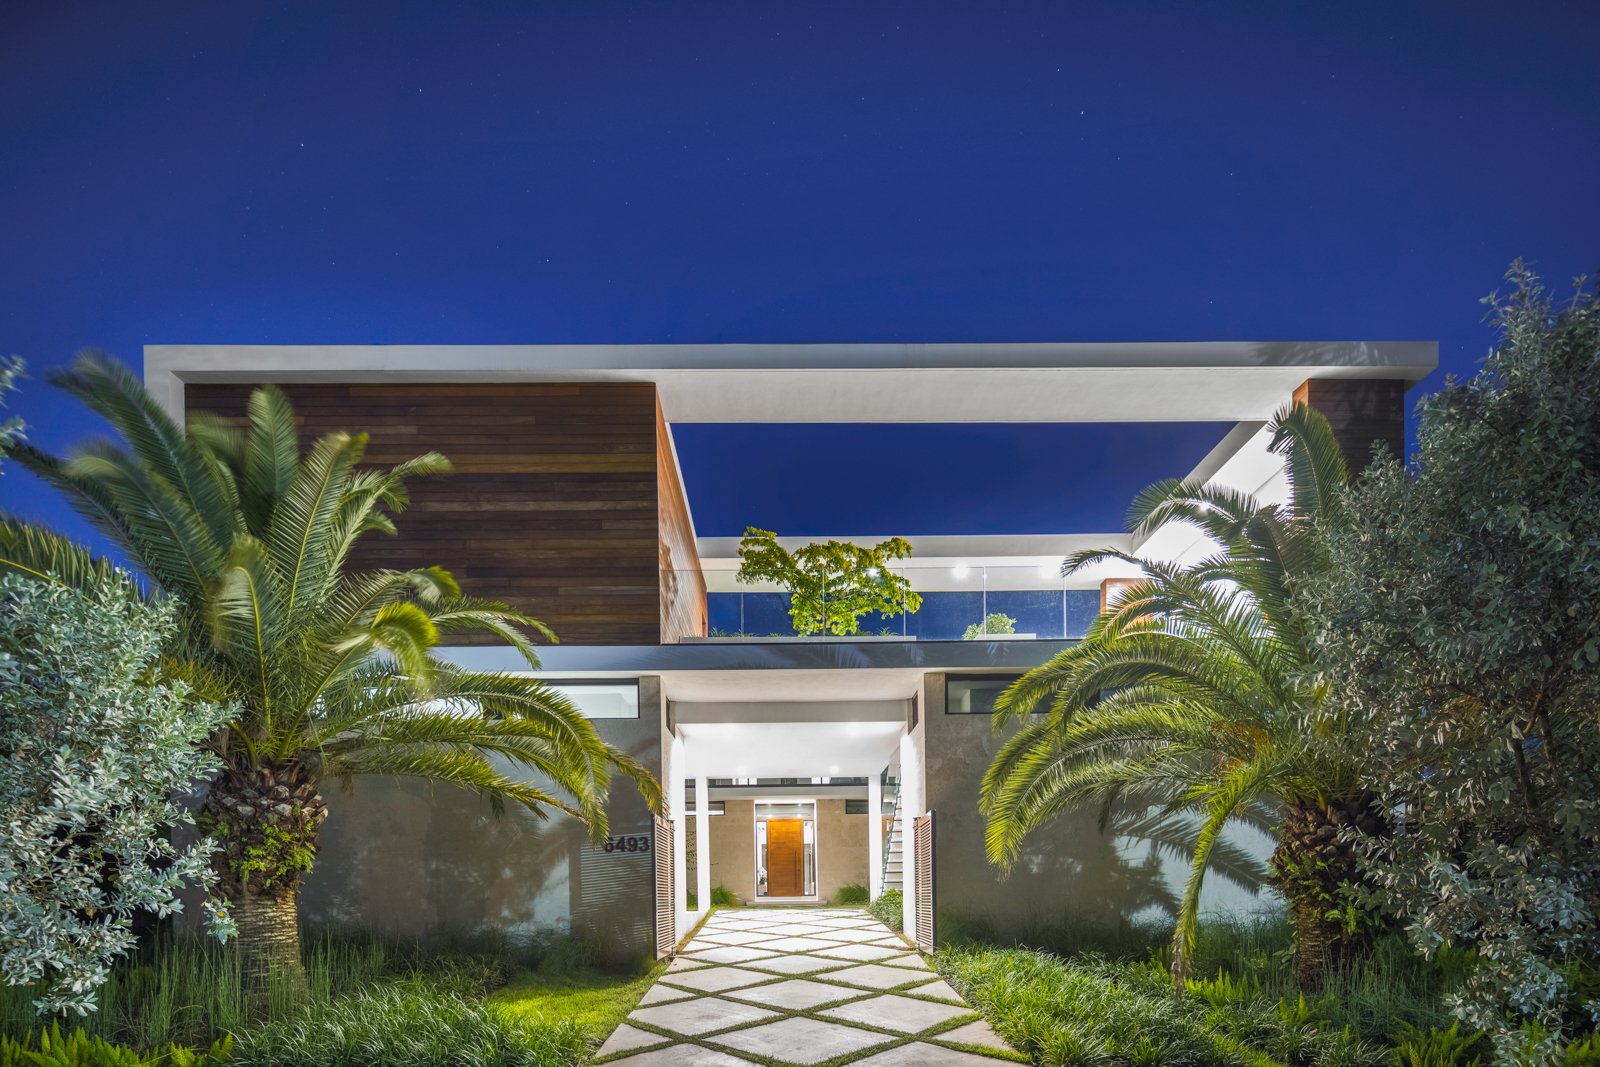 Grammy Award-Winning Rapper Future Buys Allison Island Home For $16.3 Million On Miami Beach 31.jpg